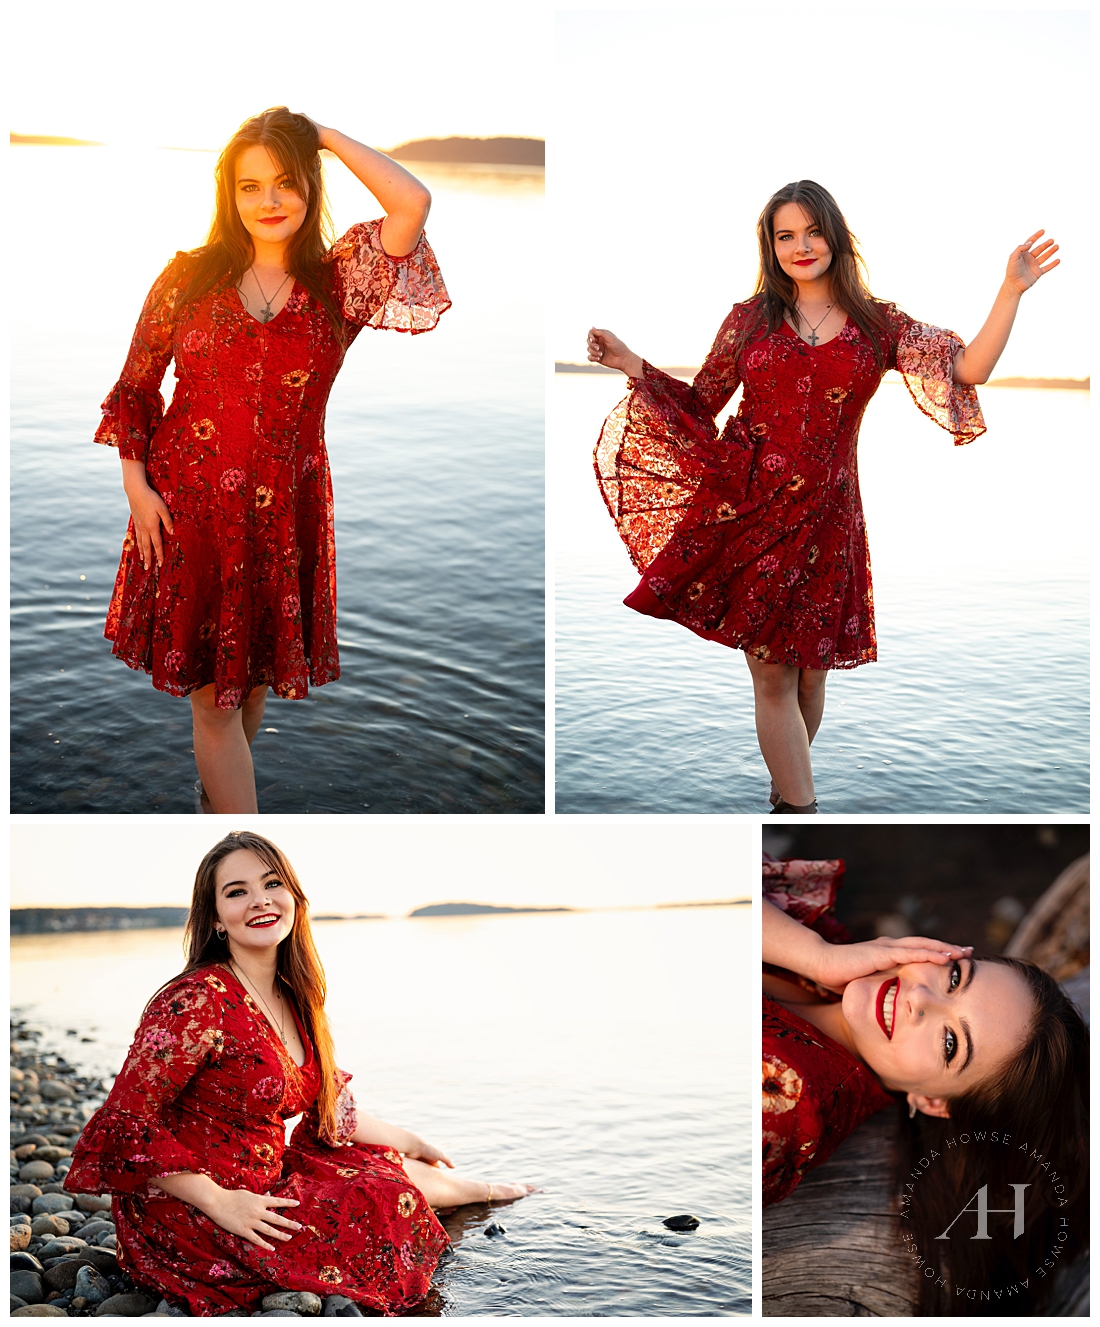 Beachy Waterfront Senior Photos At Sunset | Red Sundress and Bare Feet | Amanda Howse Photography